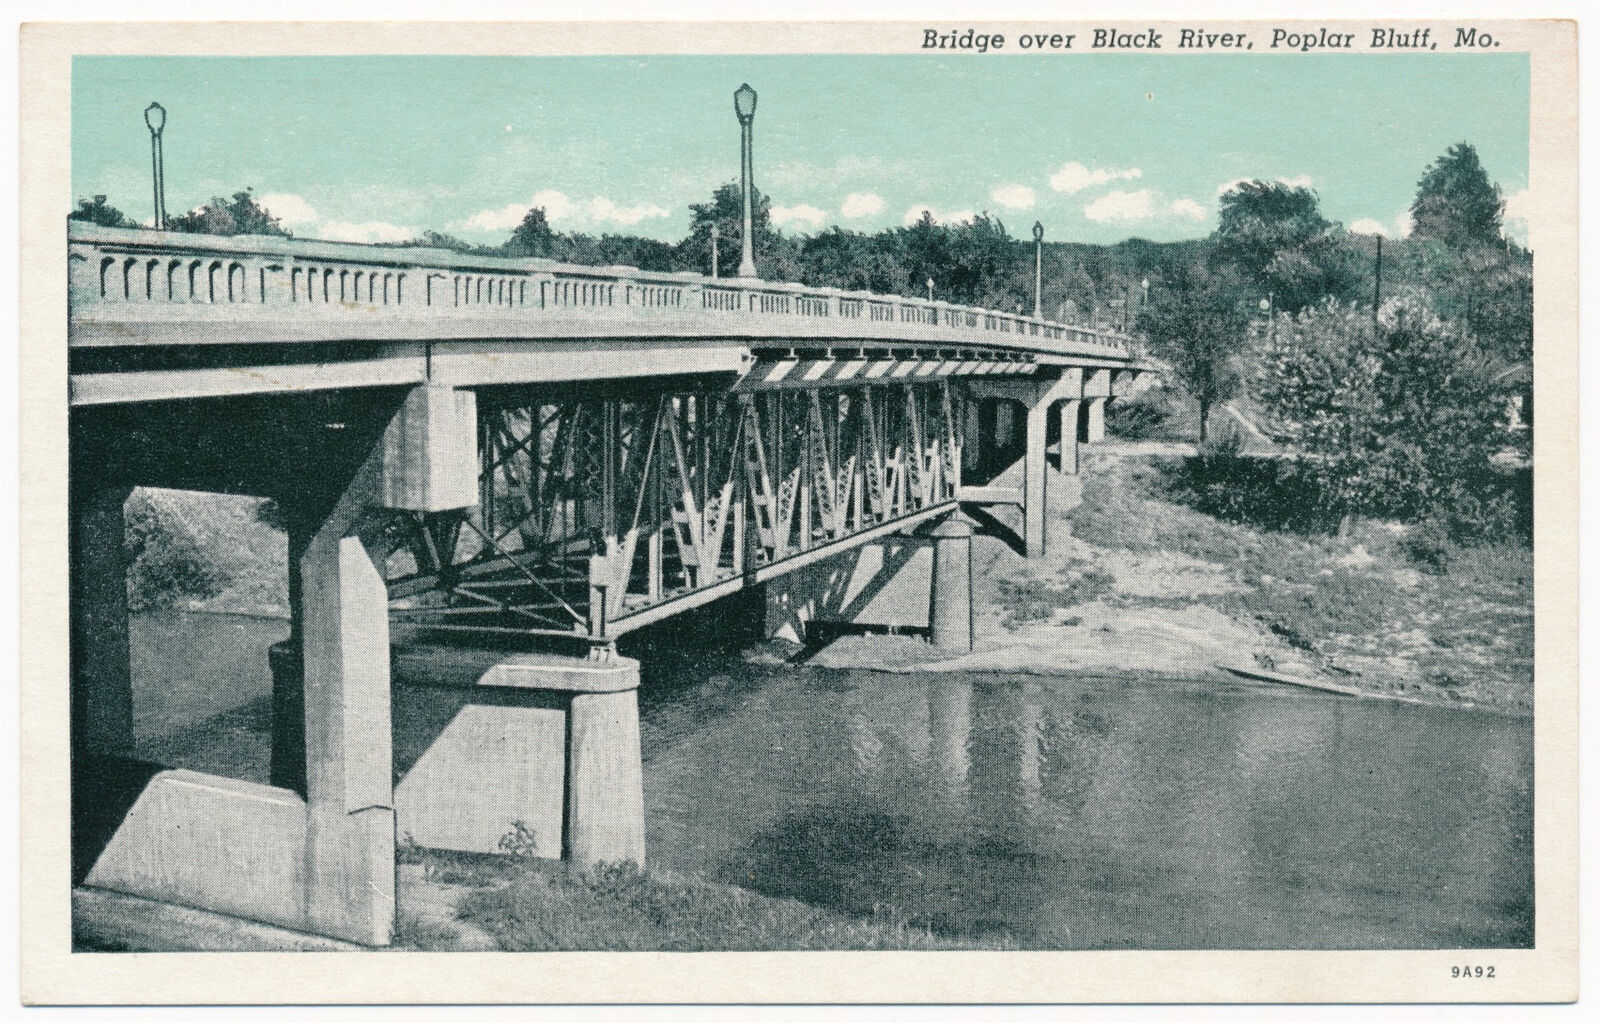 Bridge over Black River, Poplar Bluff, Missouri ca.1920